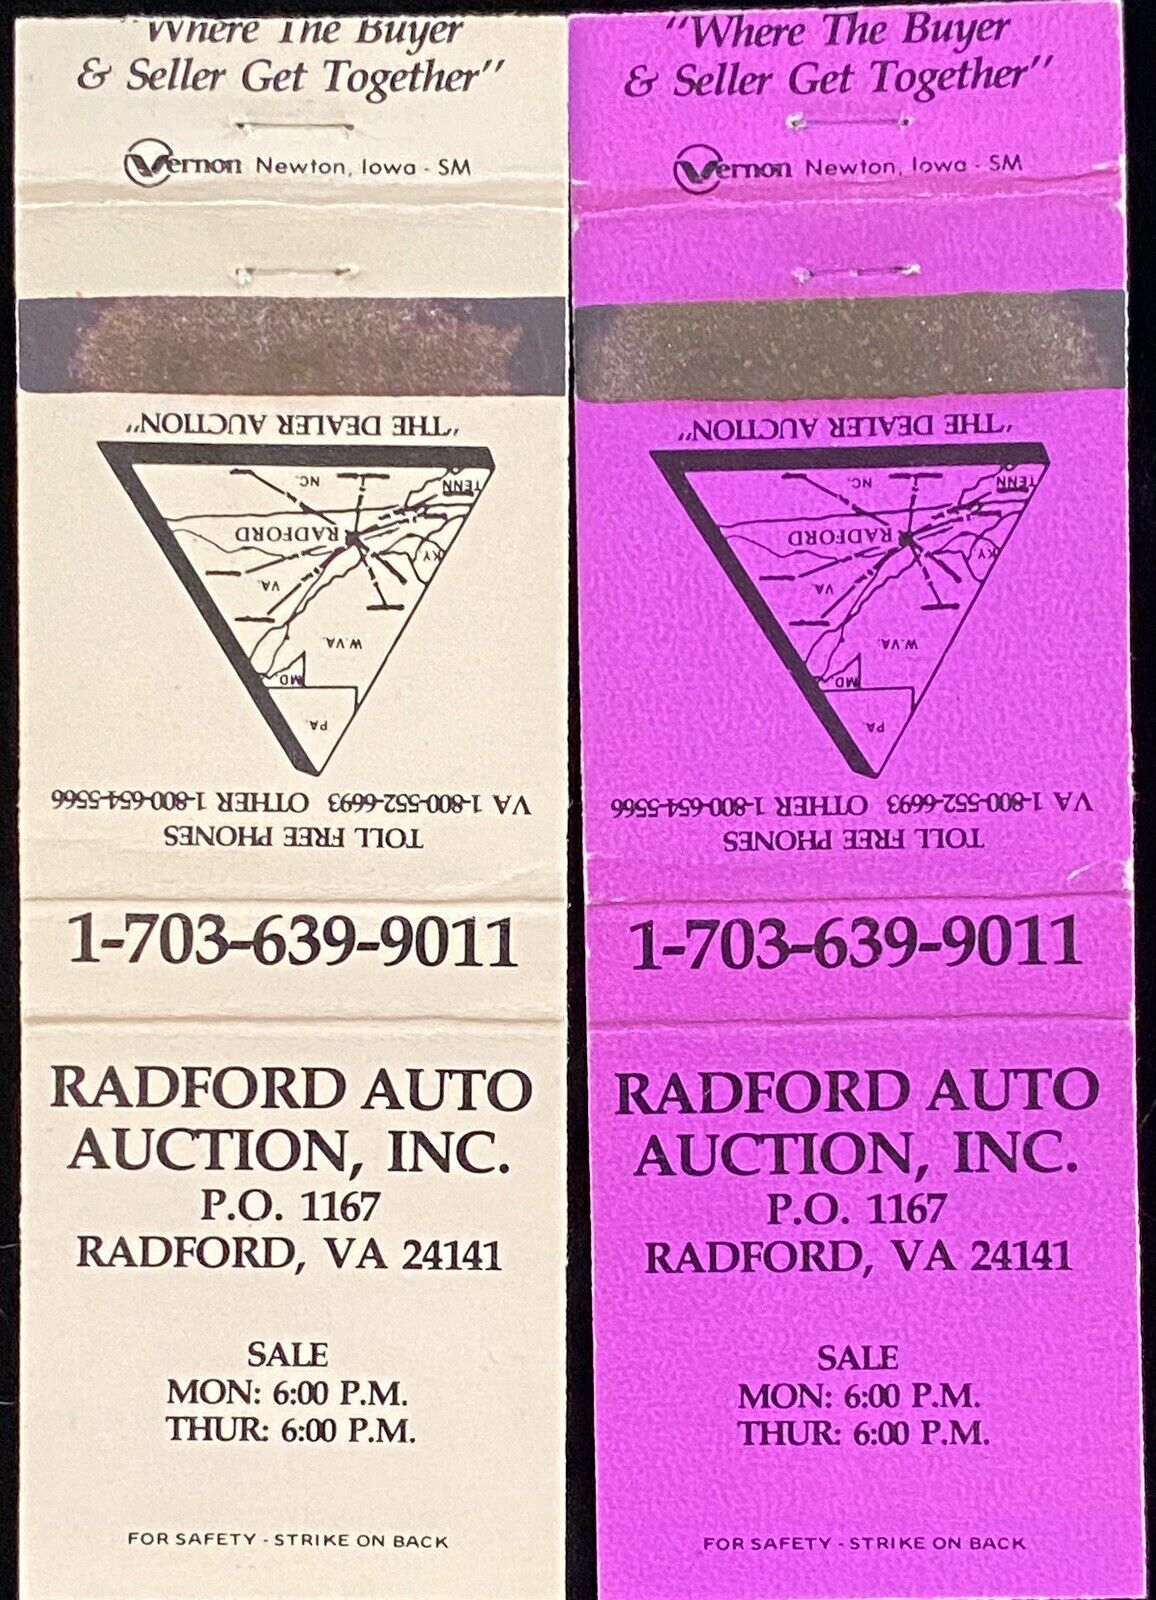 RADFORD Auto Auction Radford Virginia Set Of 2 Vintage Matchbook Covers B-3065